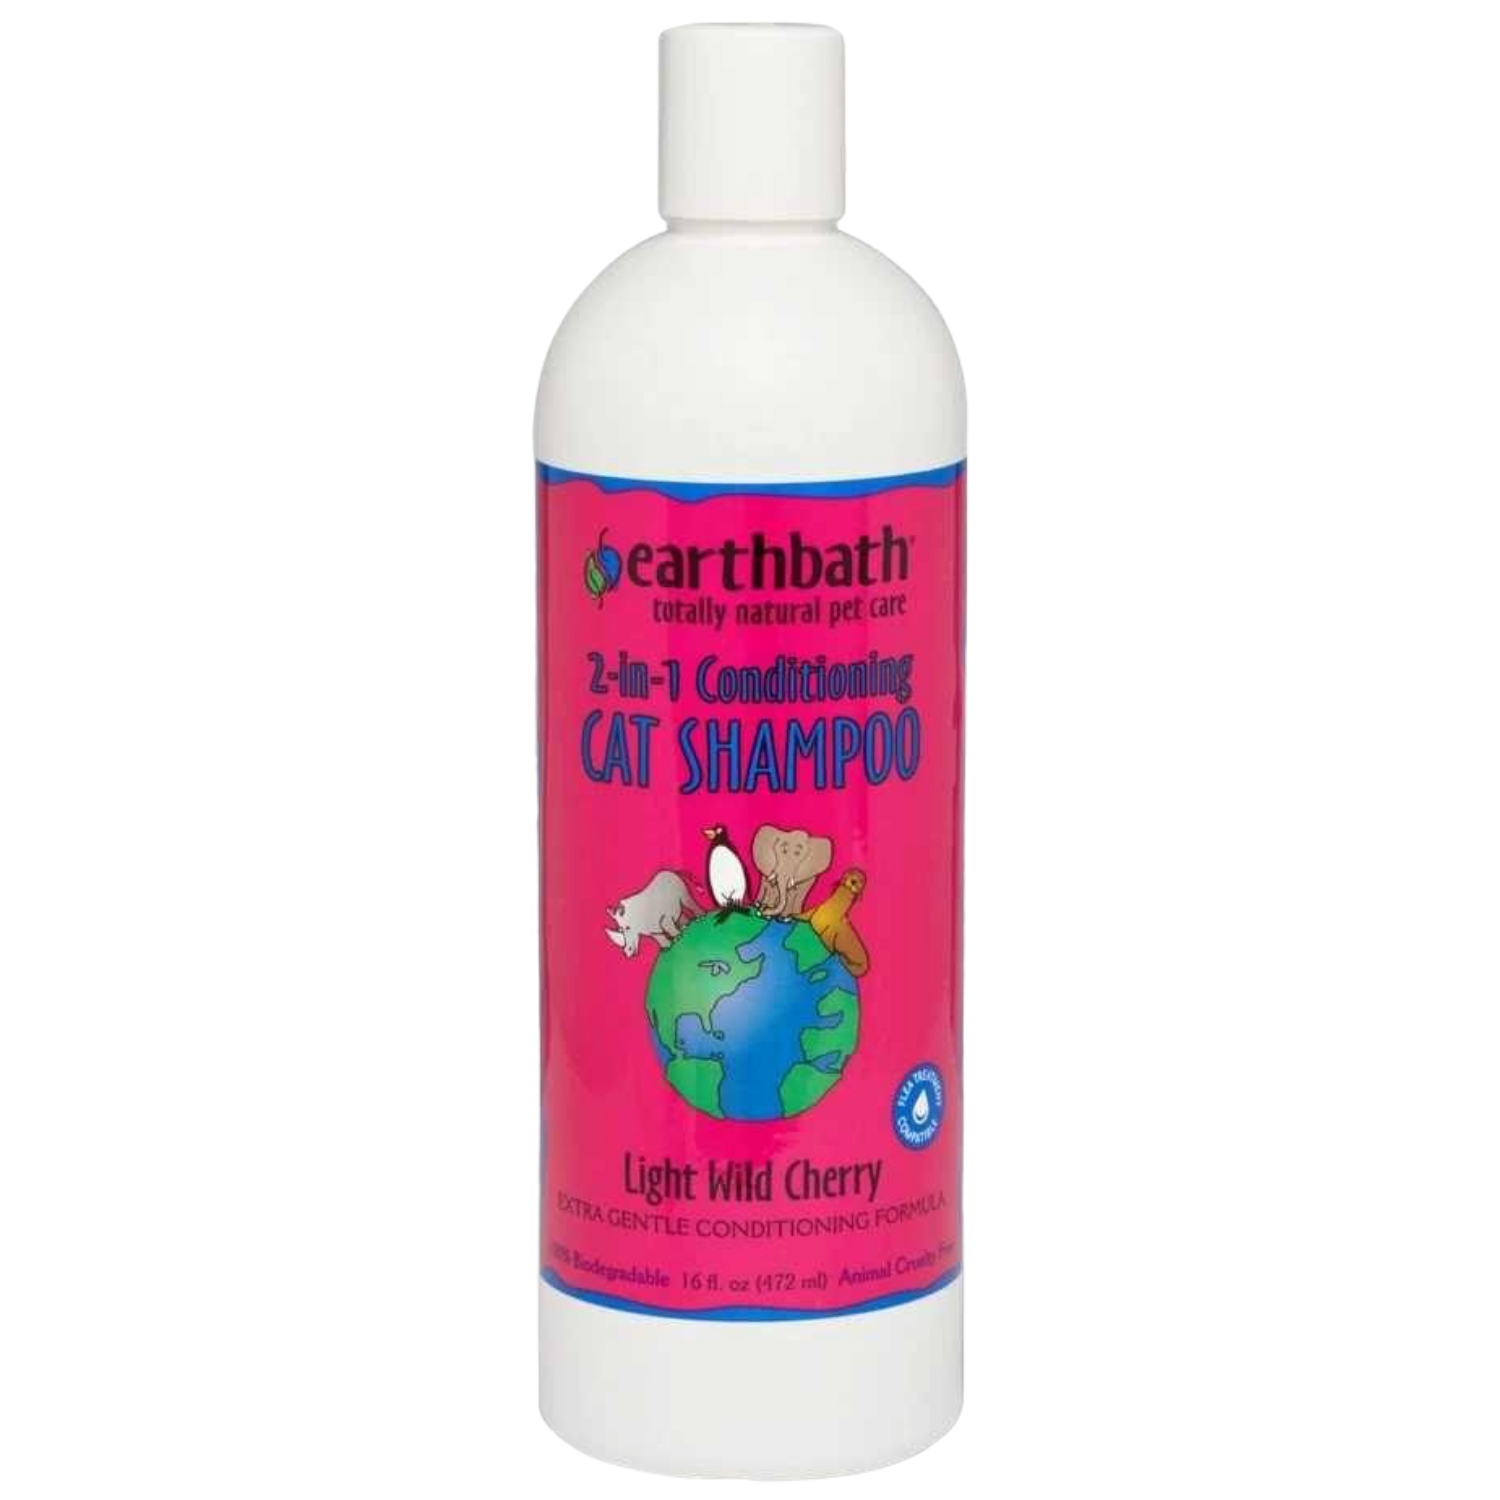 Earthbath 2-in-1 Conditioning Cat Shampoo (Light Wild Cherry) - 472ml / 3785ml